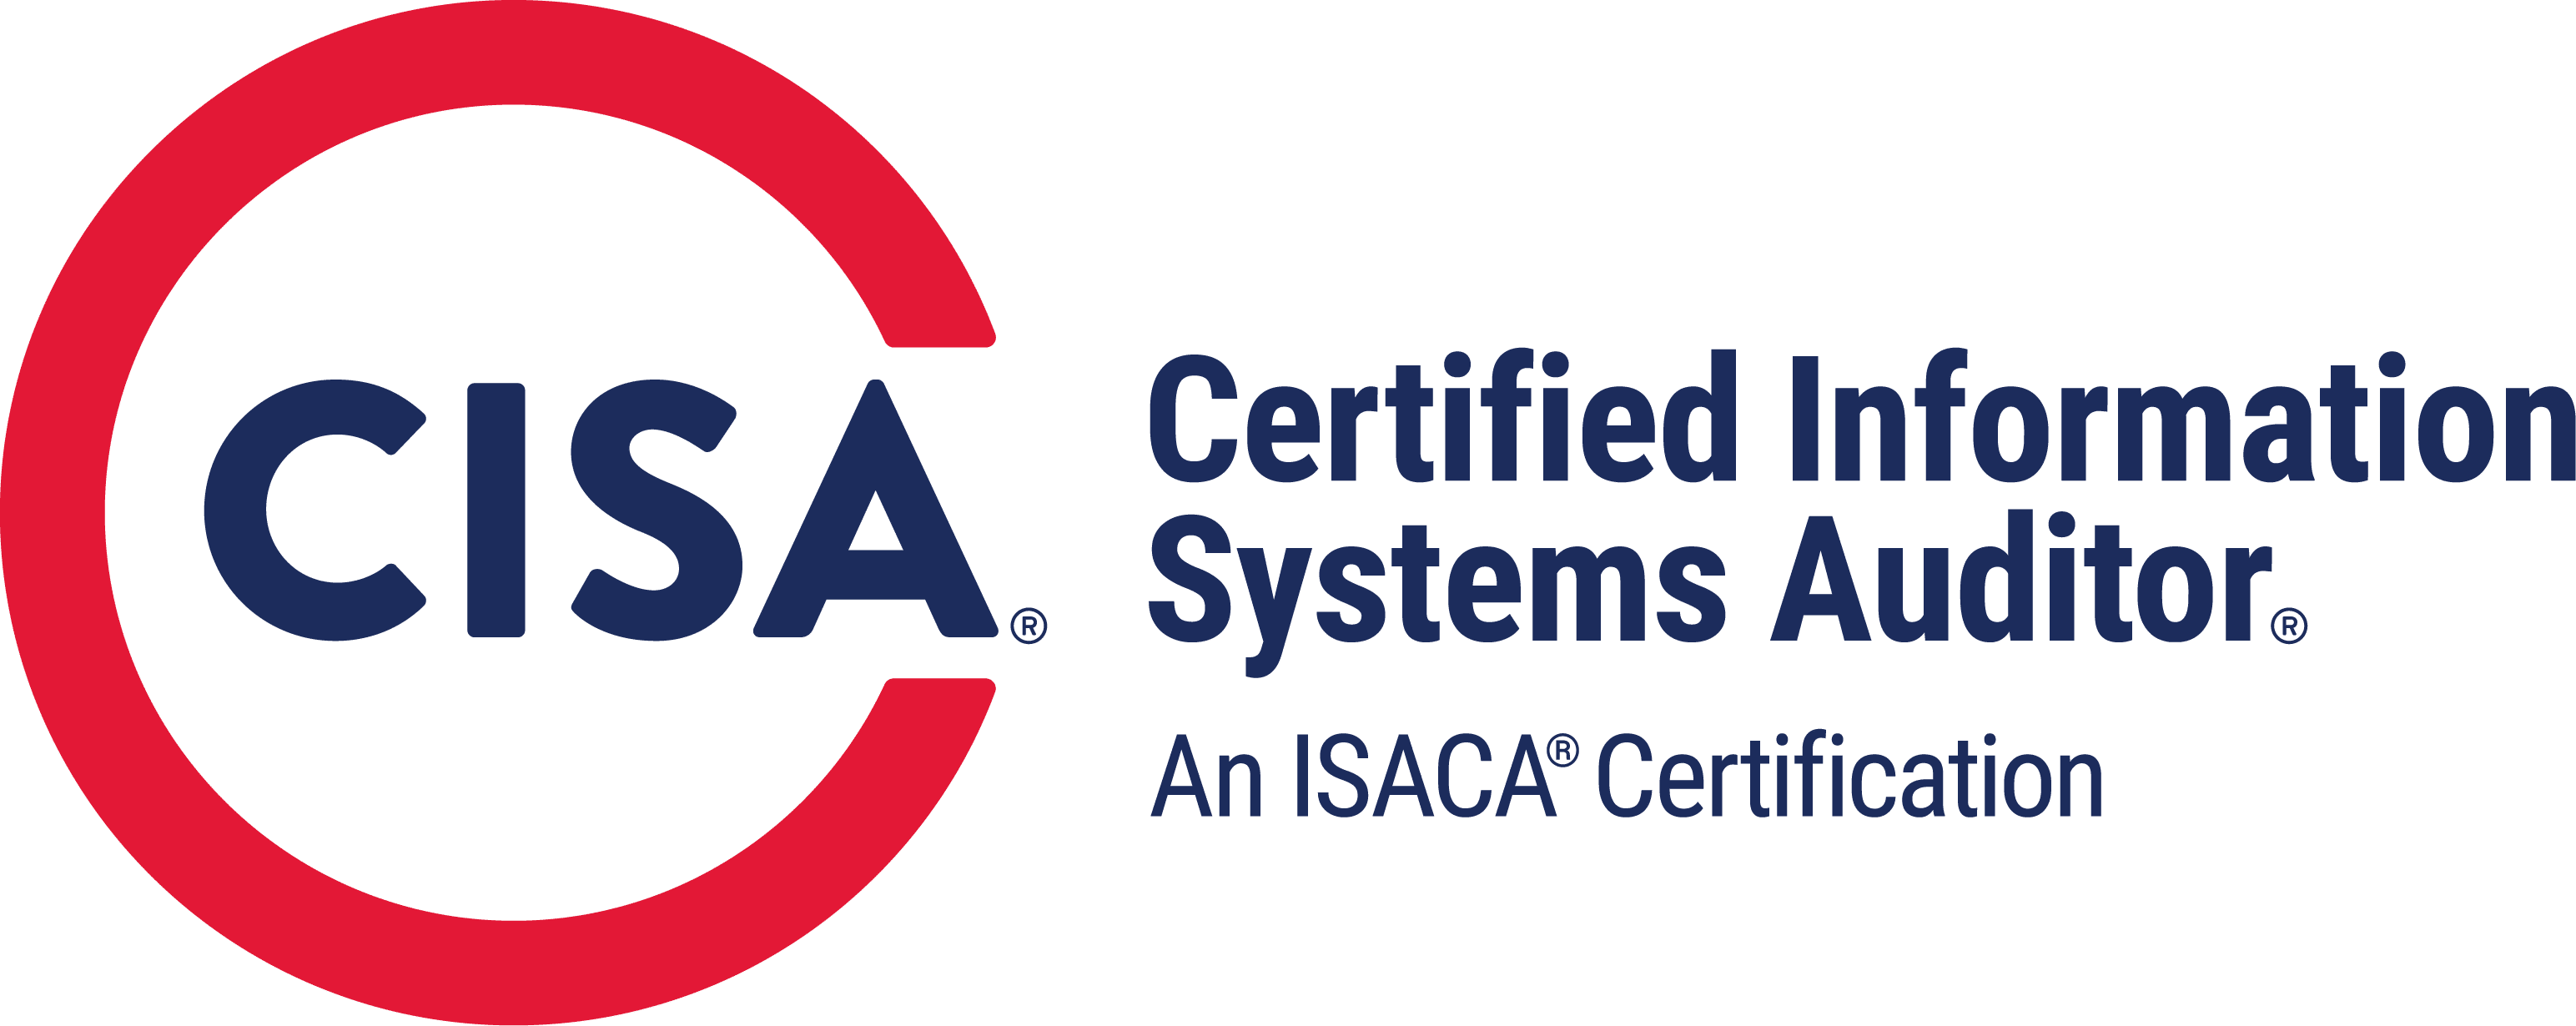 CISA certification logo